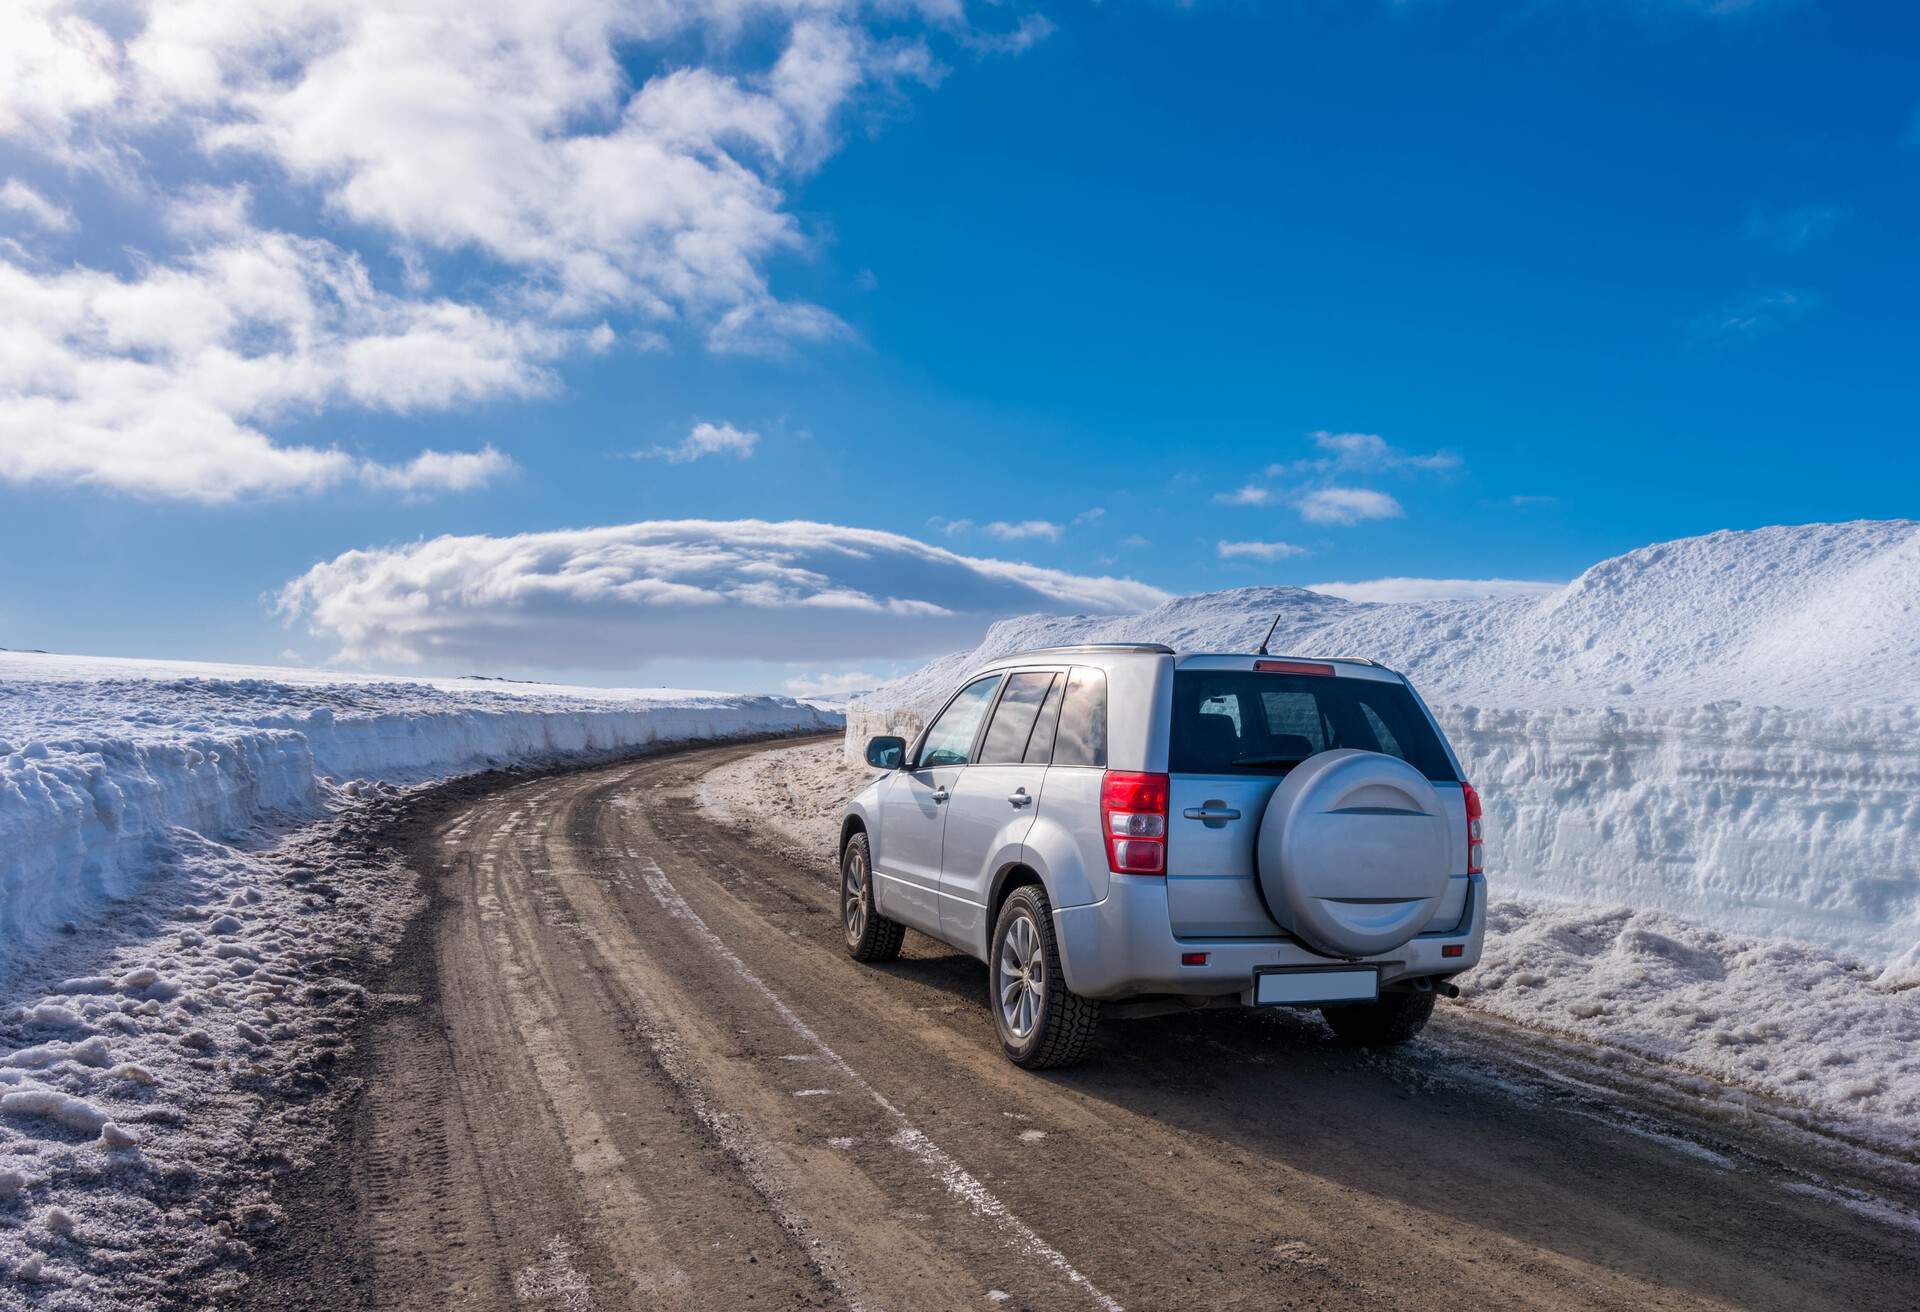 dest_iceland_reykjavik_theme_car_driving_snow-shutterstock-portfolio_704630515-1